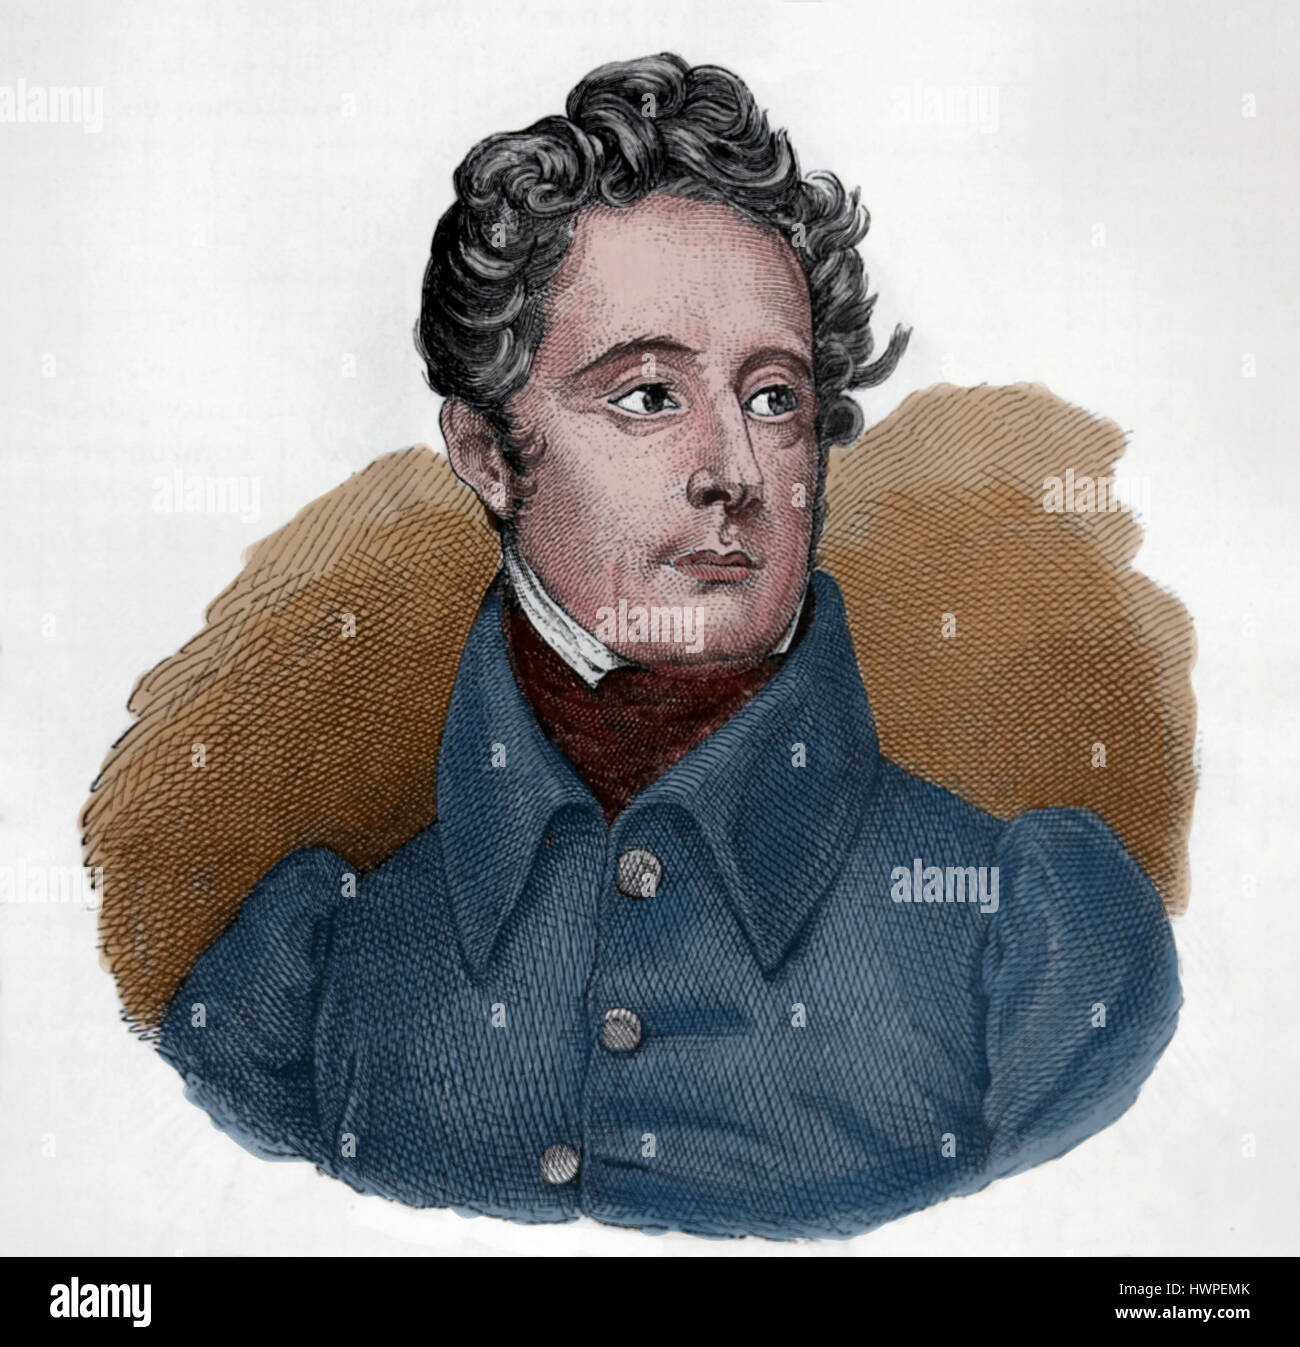 Alphonse de Lamartine (1790-1869). French writer, poet and politician. Engraving, 1883. Portrait. Color. Stock Photo